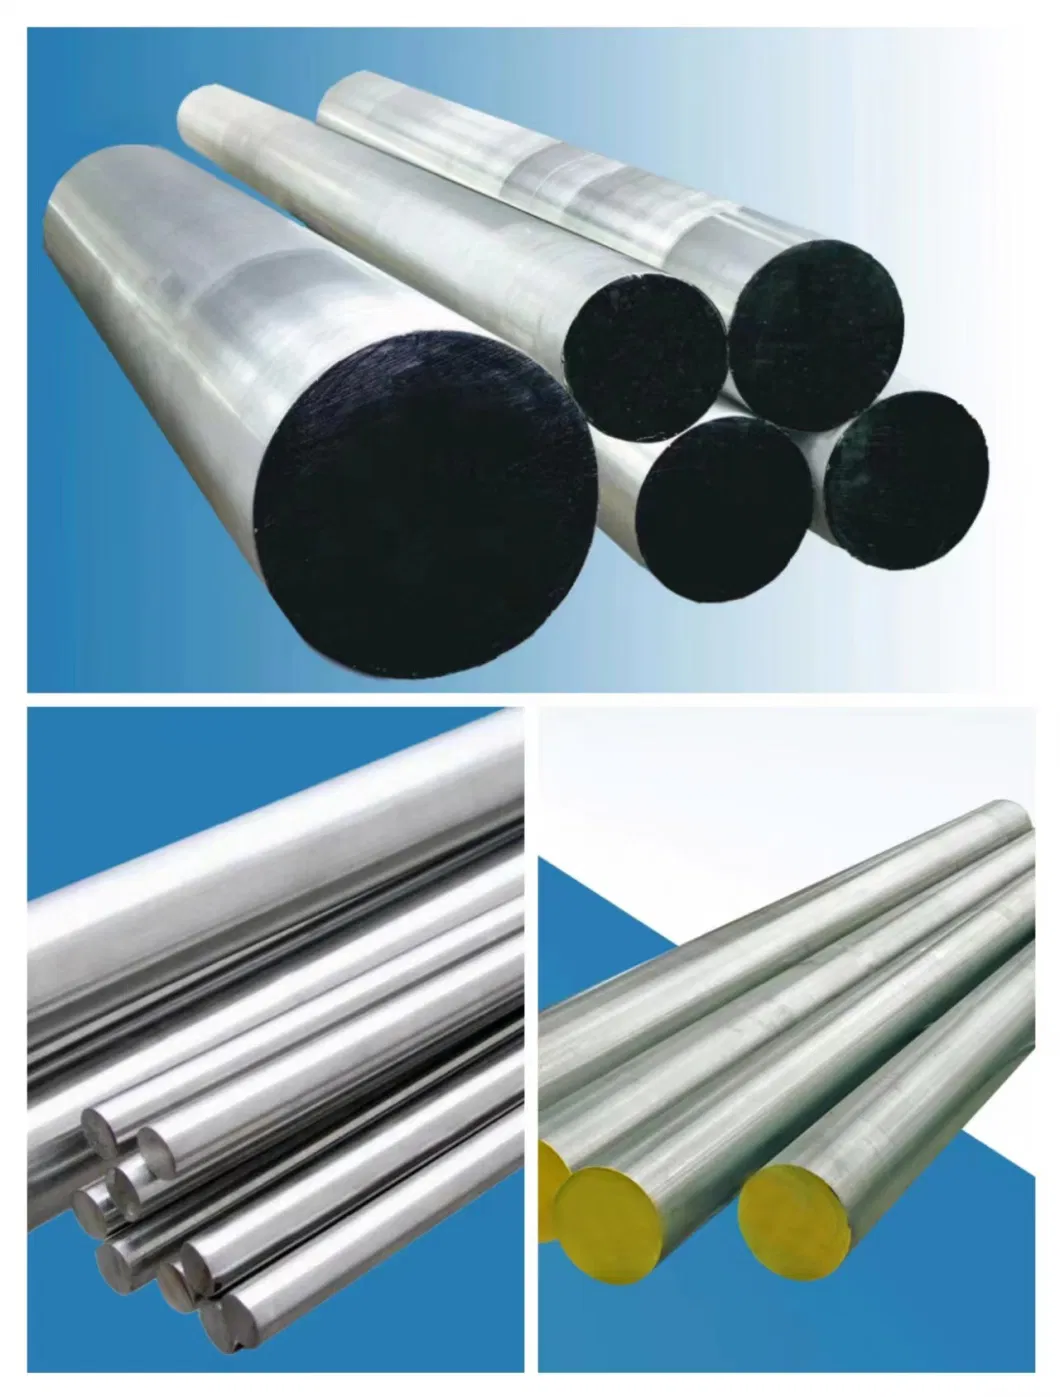 China Wholesale AISI 4140/4130/1018/1020/1045 S45c Sm45c SAE 1035 Hard Chrome Carbon Steel Round Alloy Steel Bars Price Per Kg A36 Q235 Sj275 Q355 SA279 Carbon